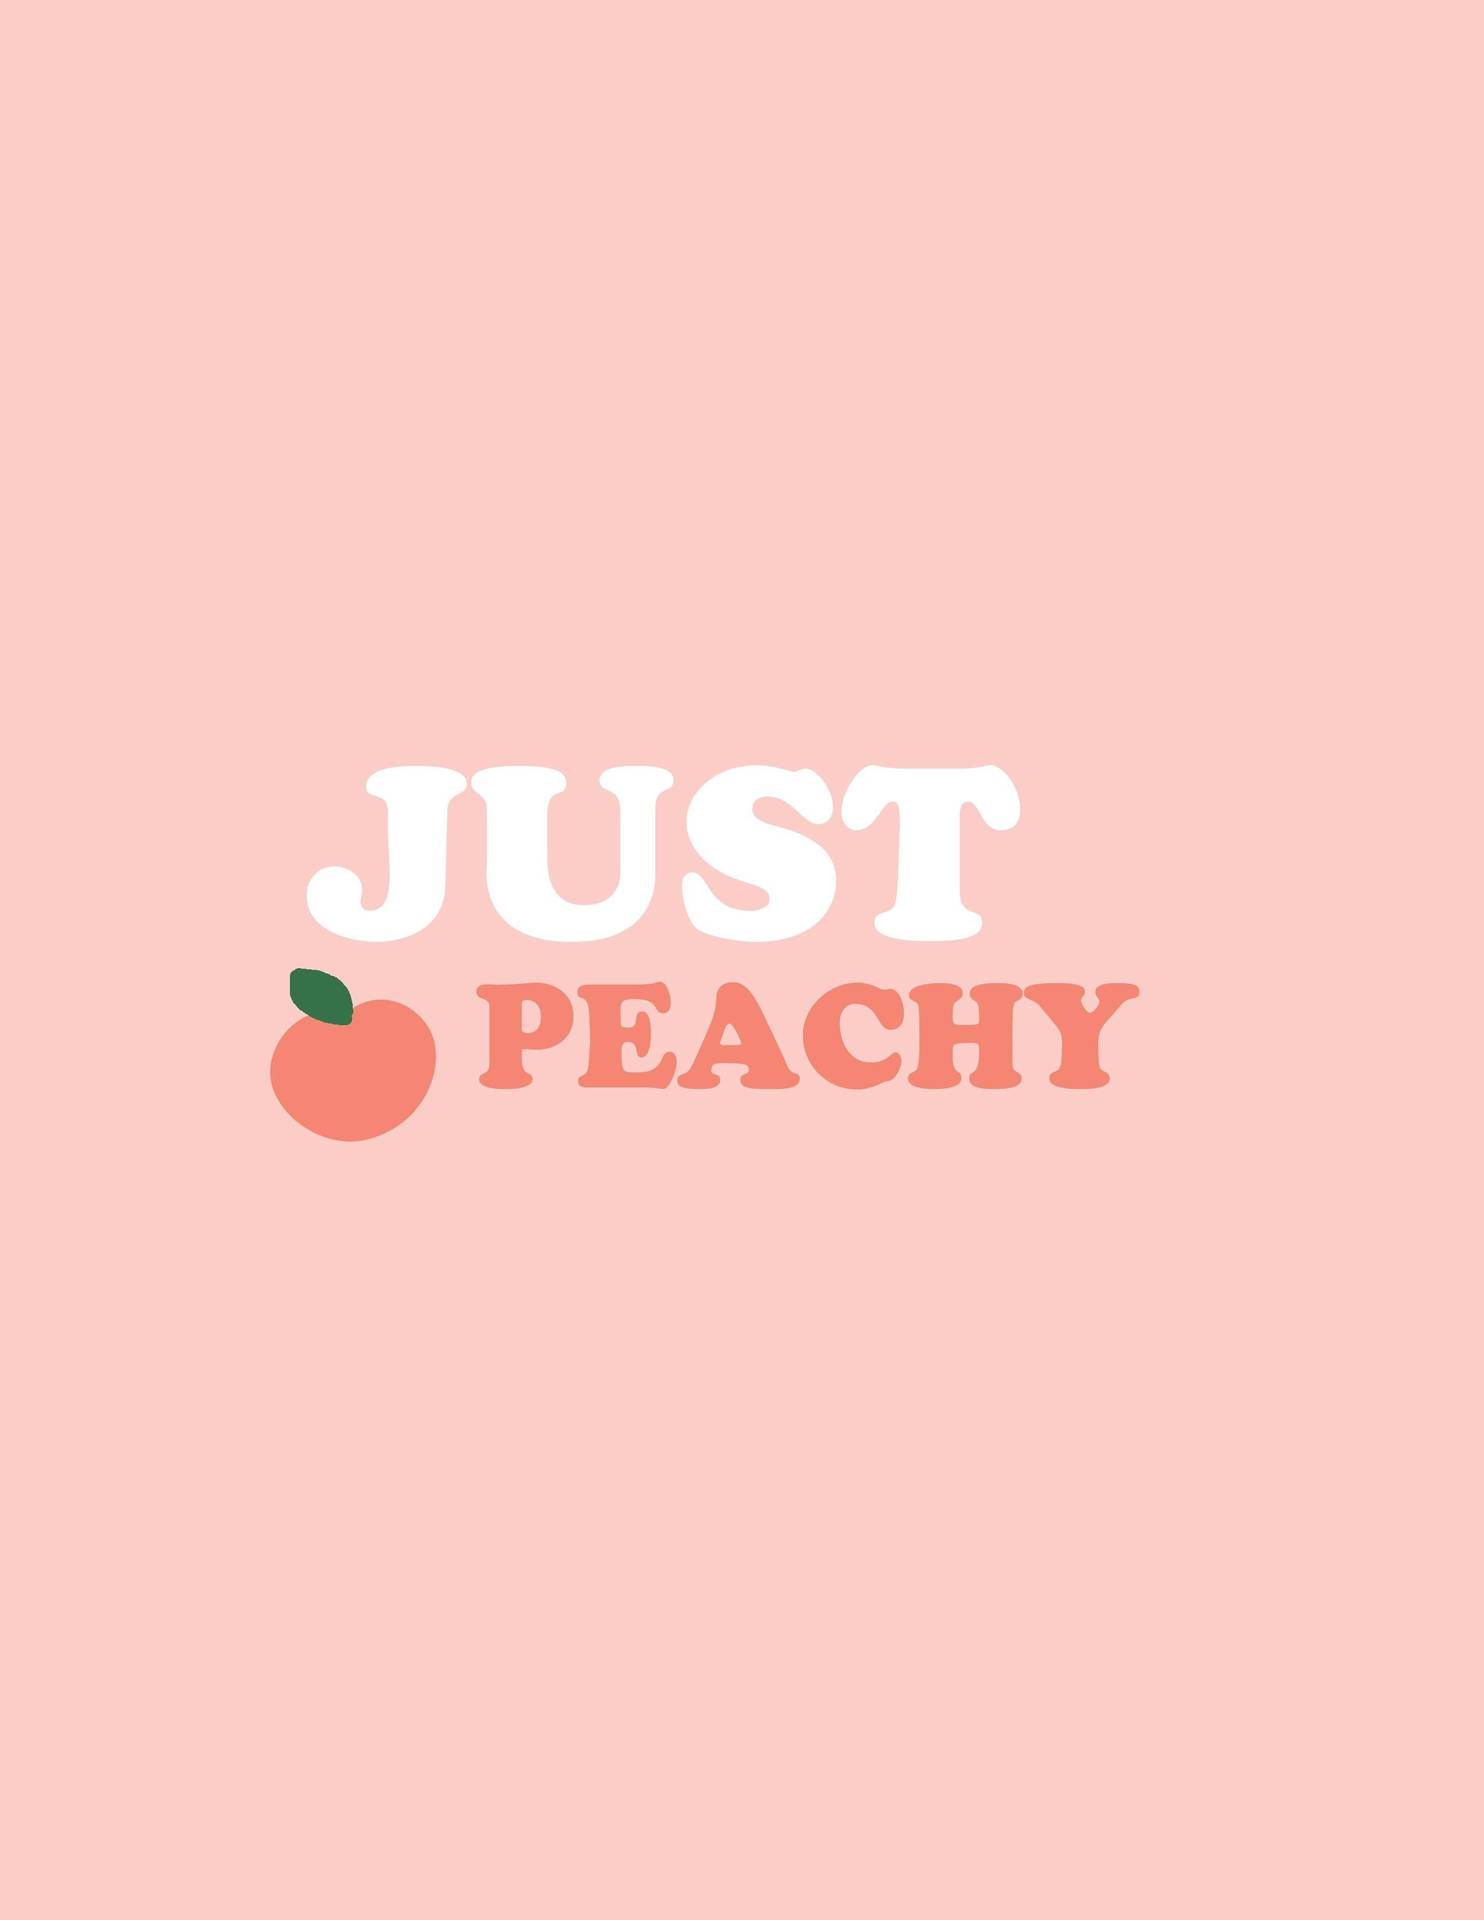 Just Peachy Peach Aesthetic Wallpaper